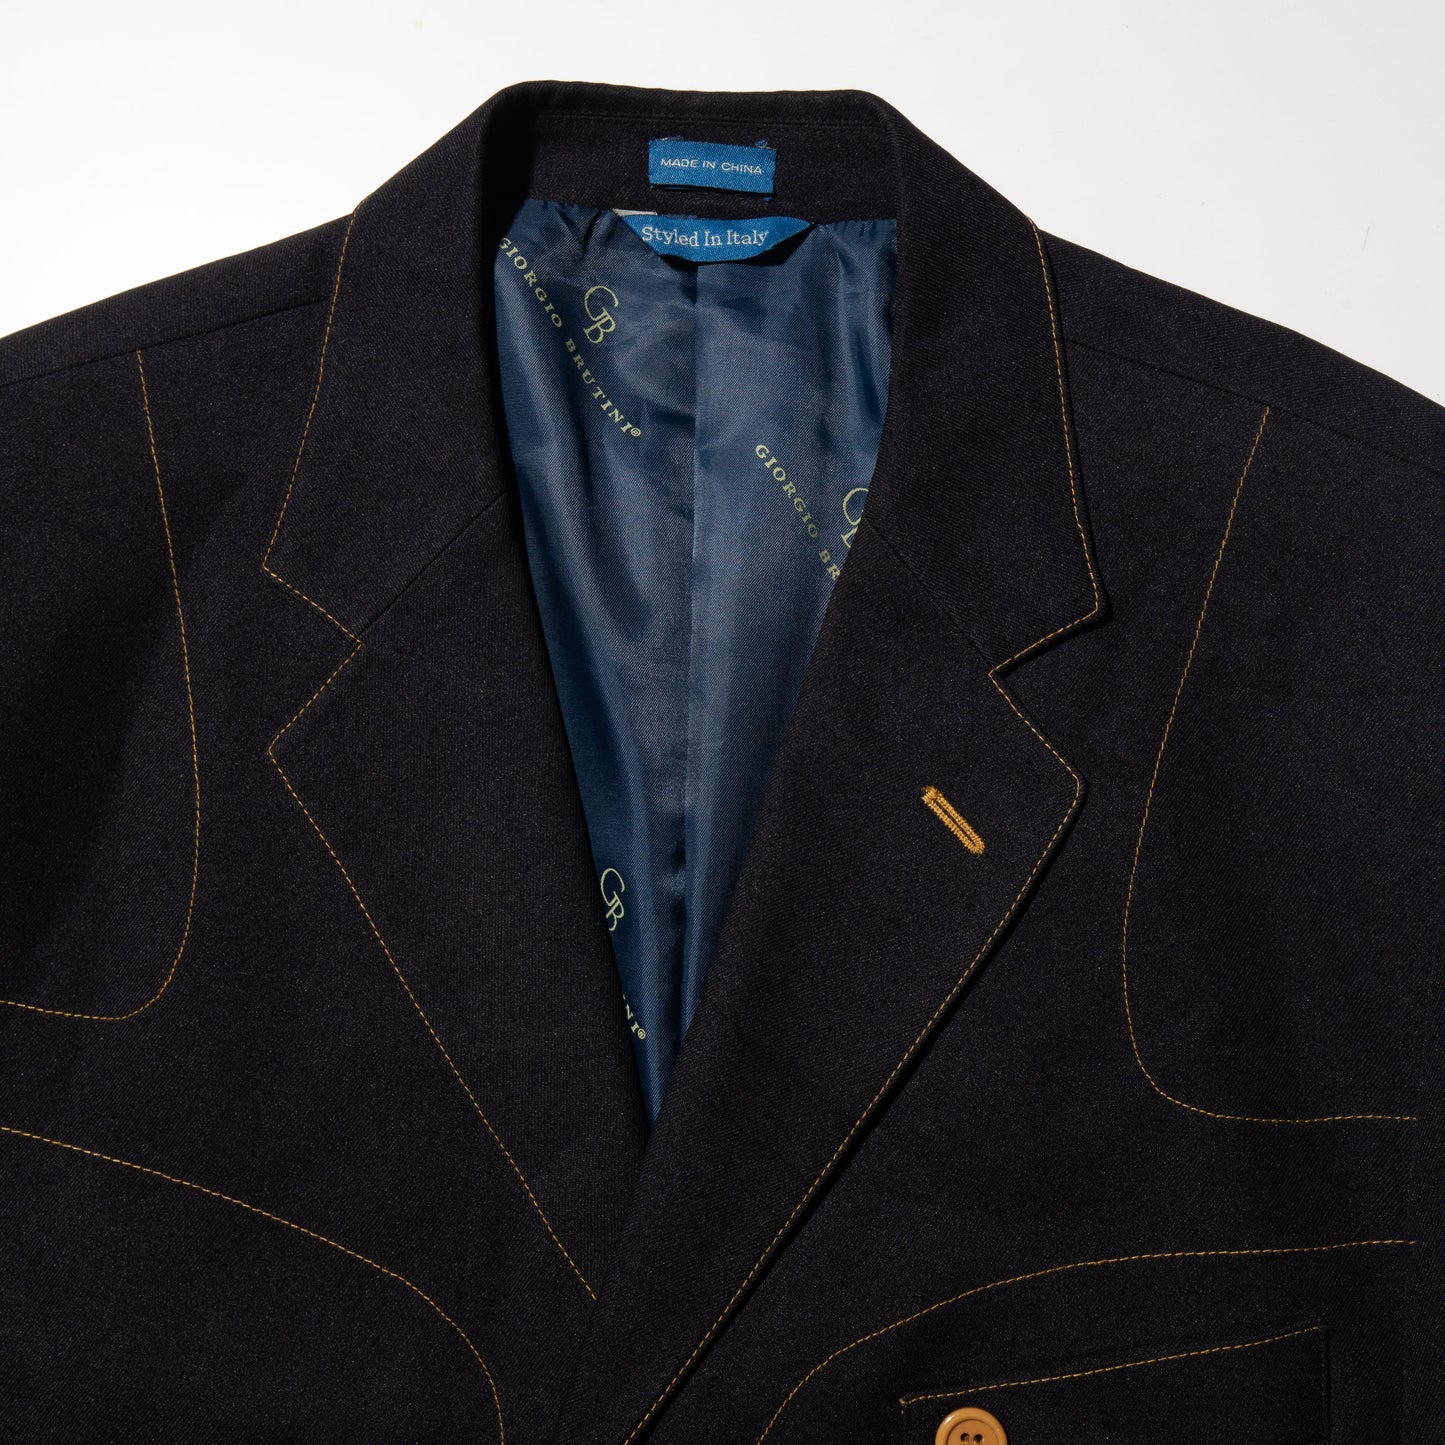 vintage stitch single tailored jacket